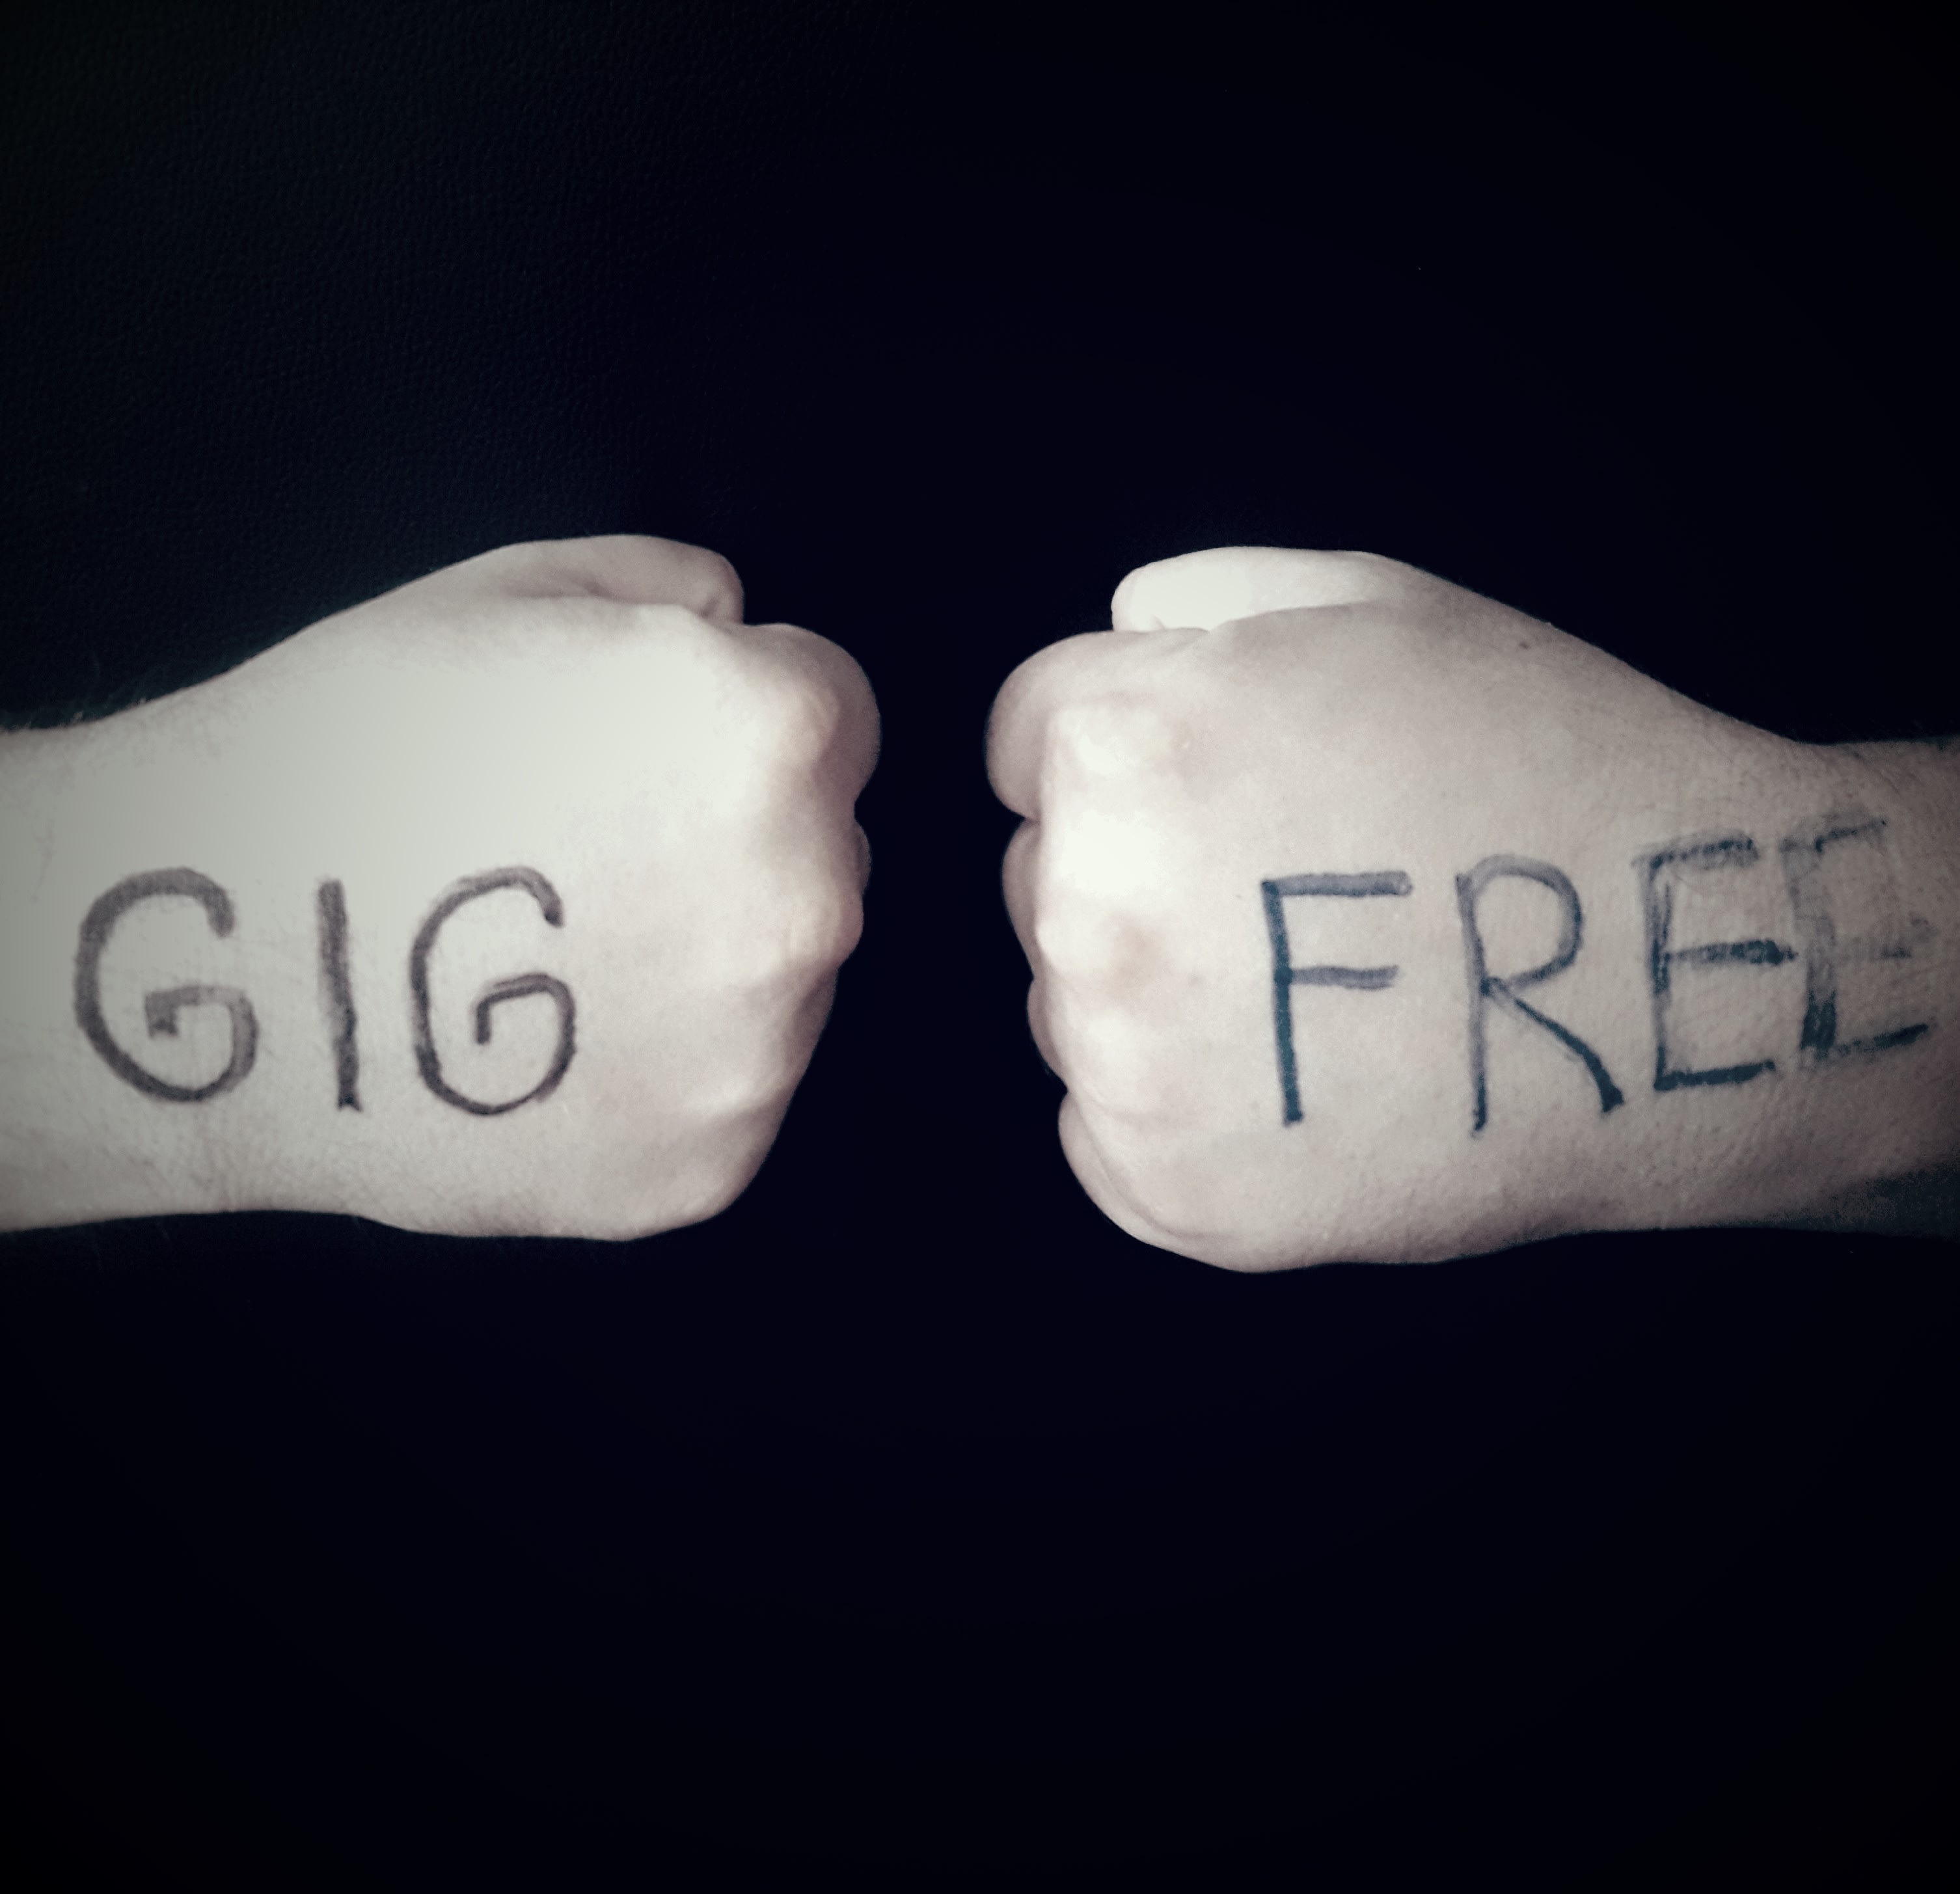 The Gig Economy vs. Freelance